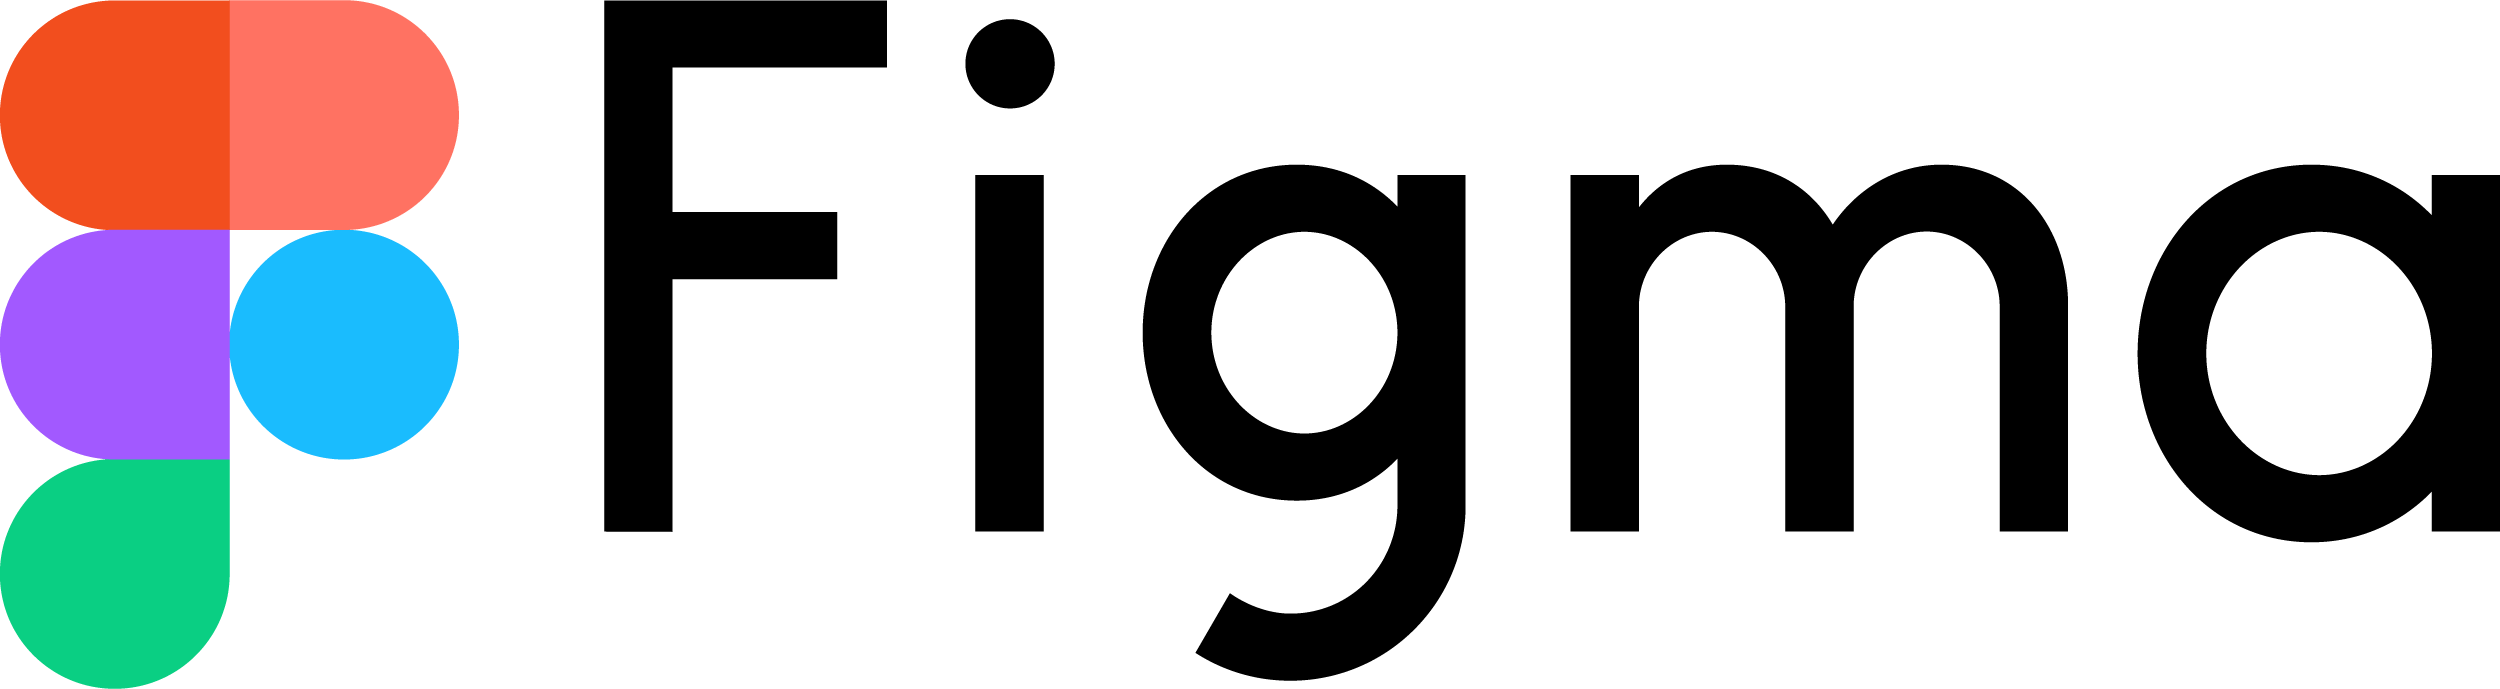 Figma Logo PNG